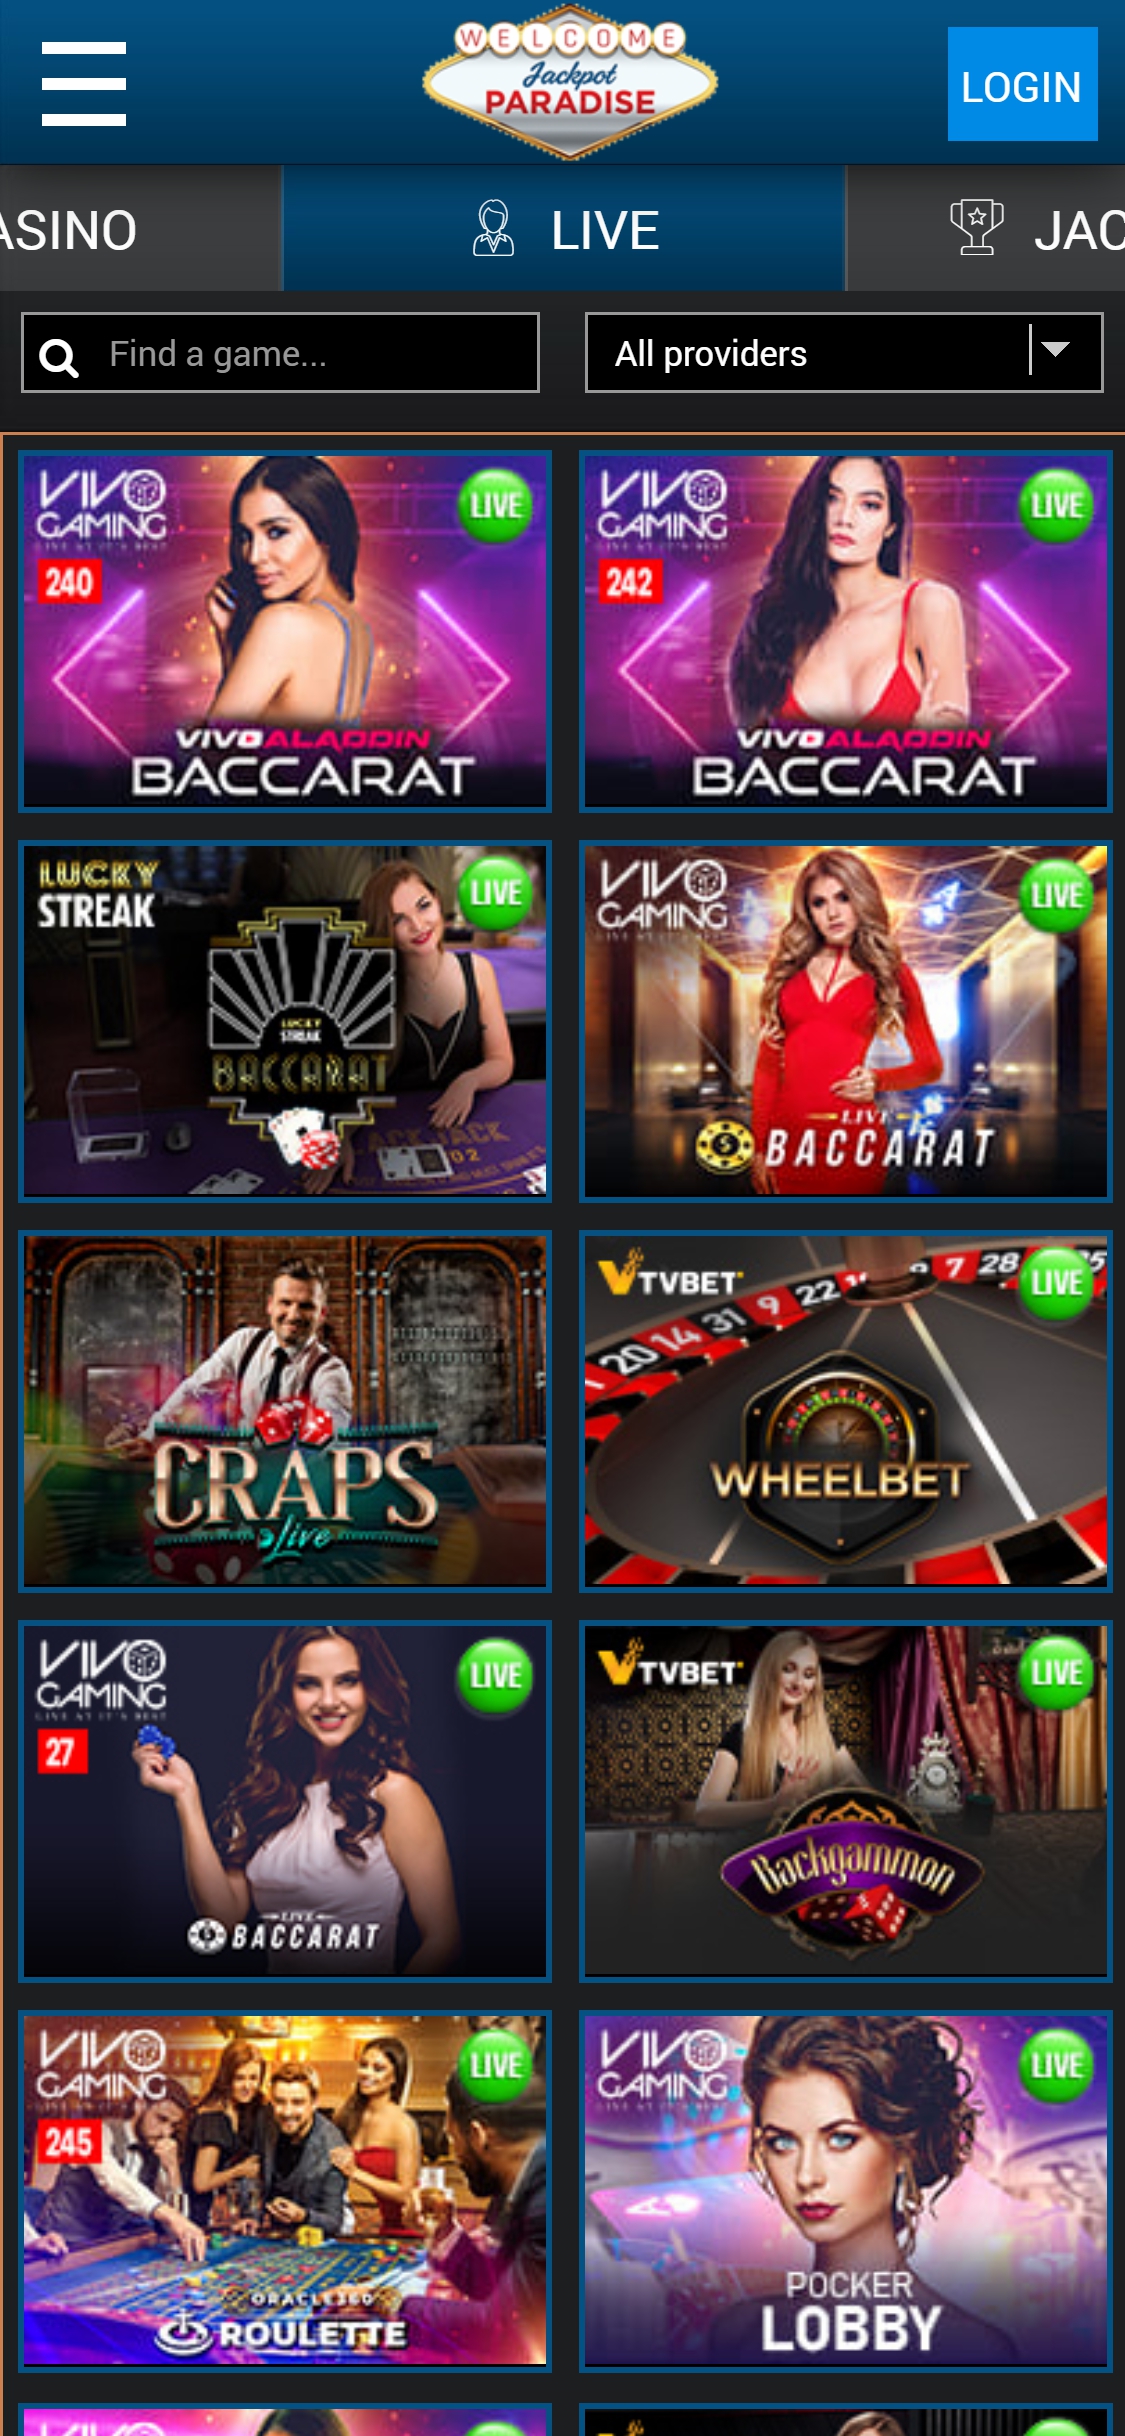 Jackpot Paradise Casino Mobile Live Dealer Games Review